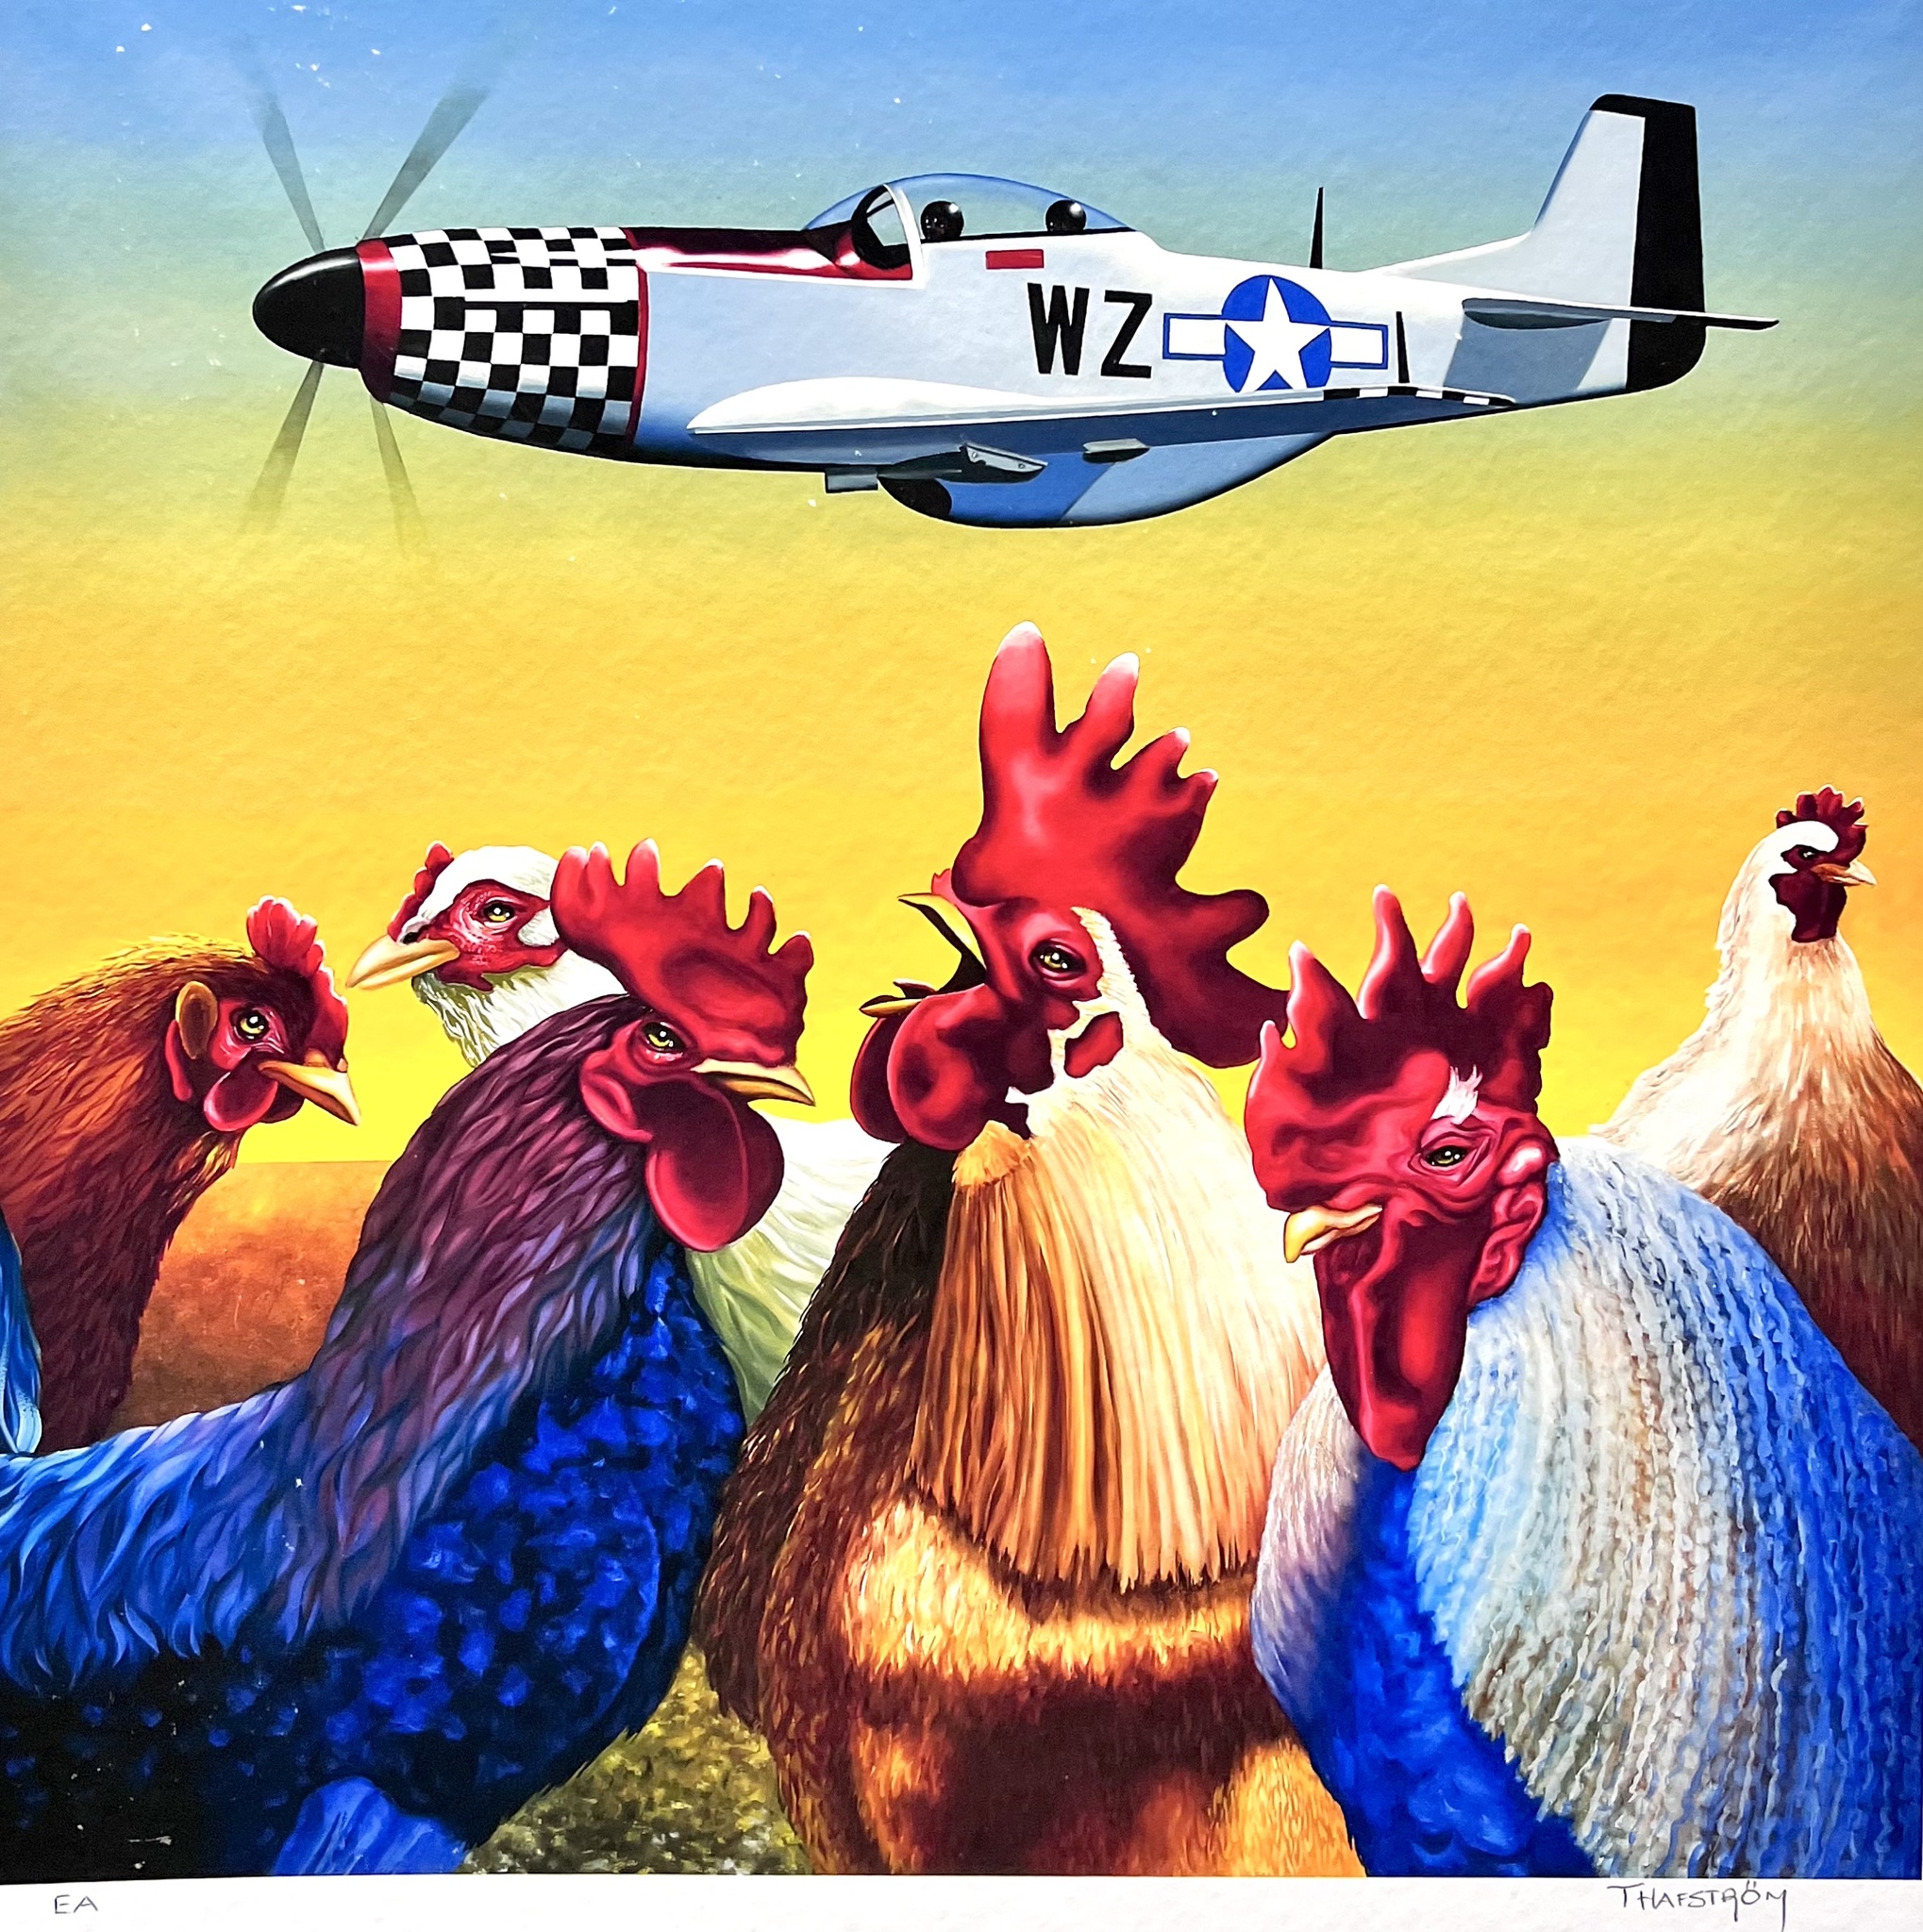 "Plane & Roosters färglitografi av Thomas Hafström, 56x56 cm.